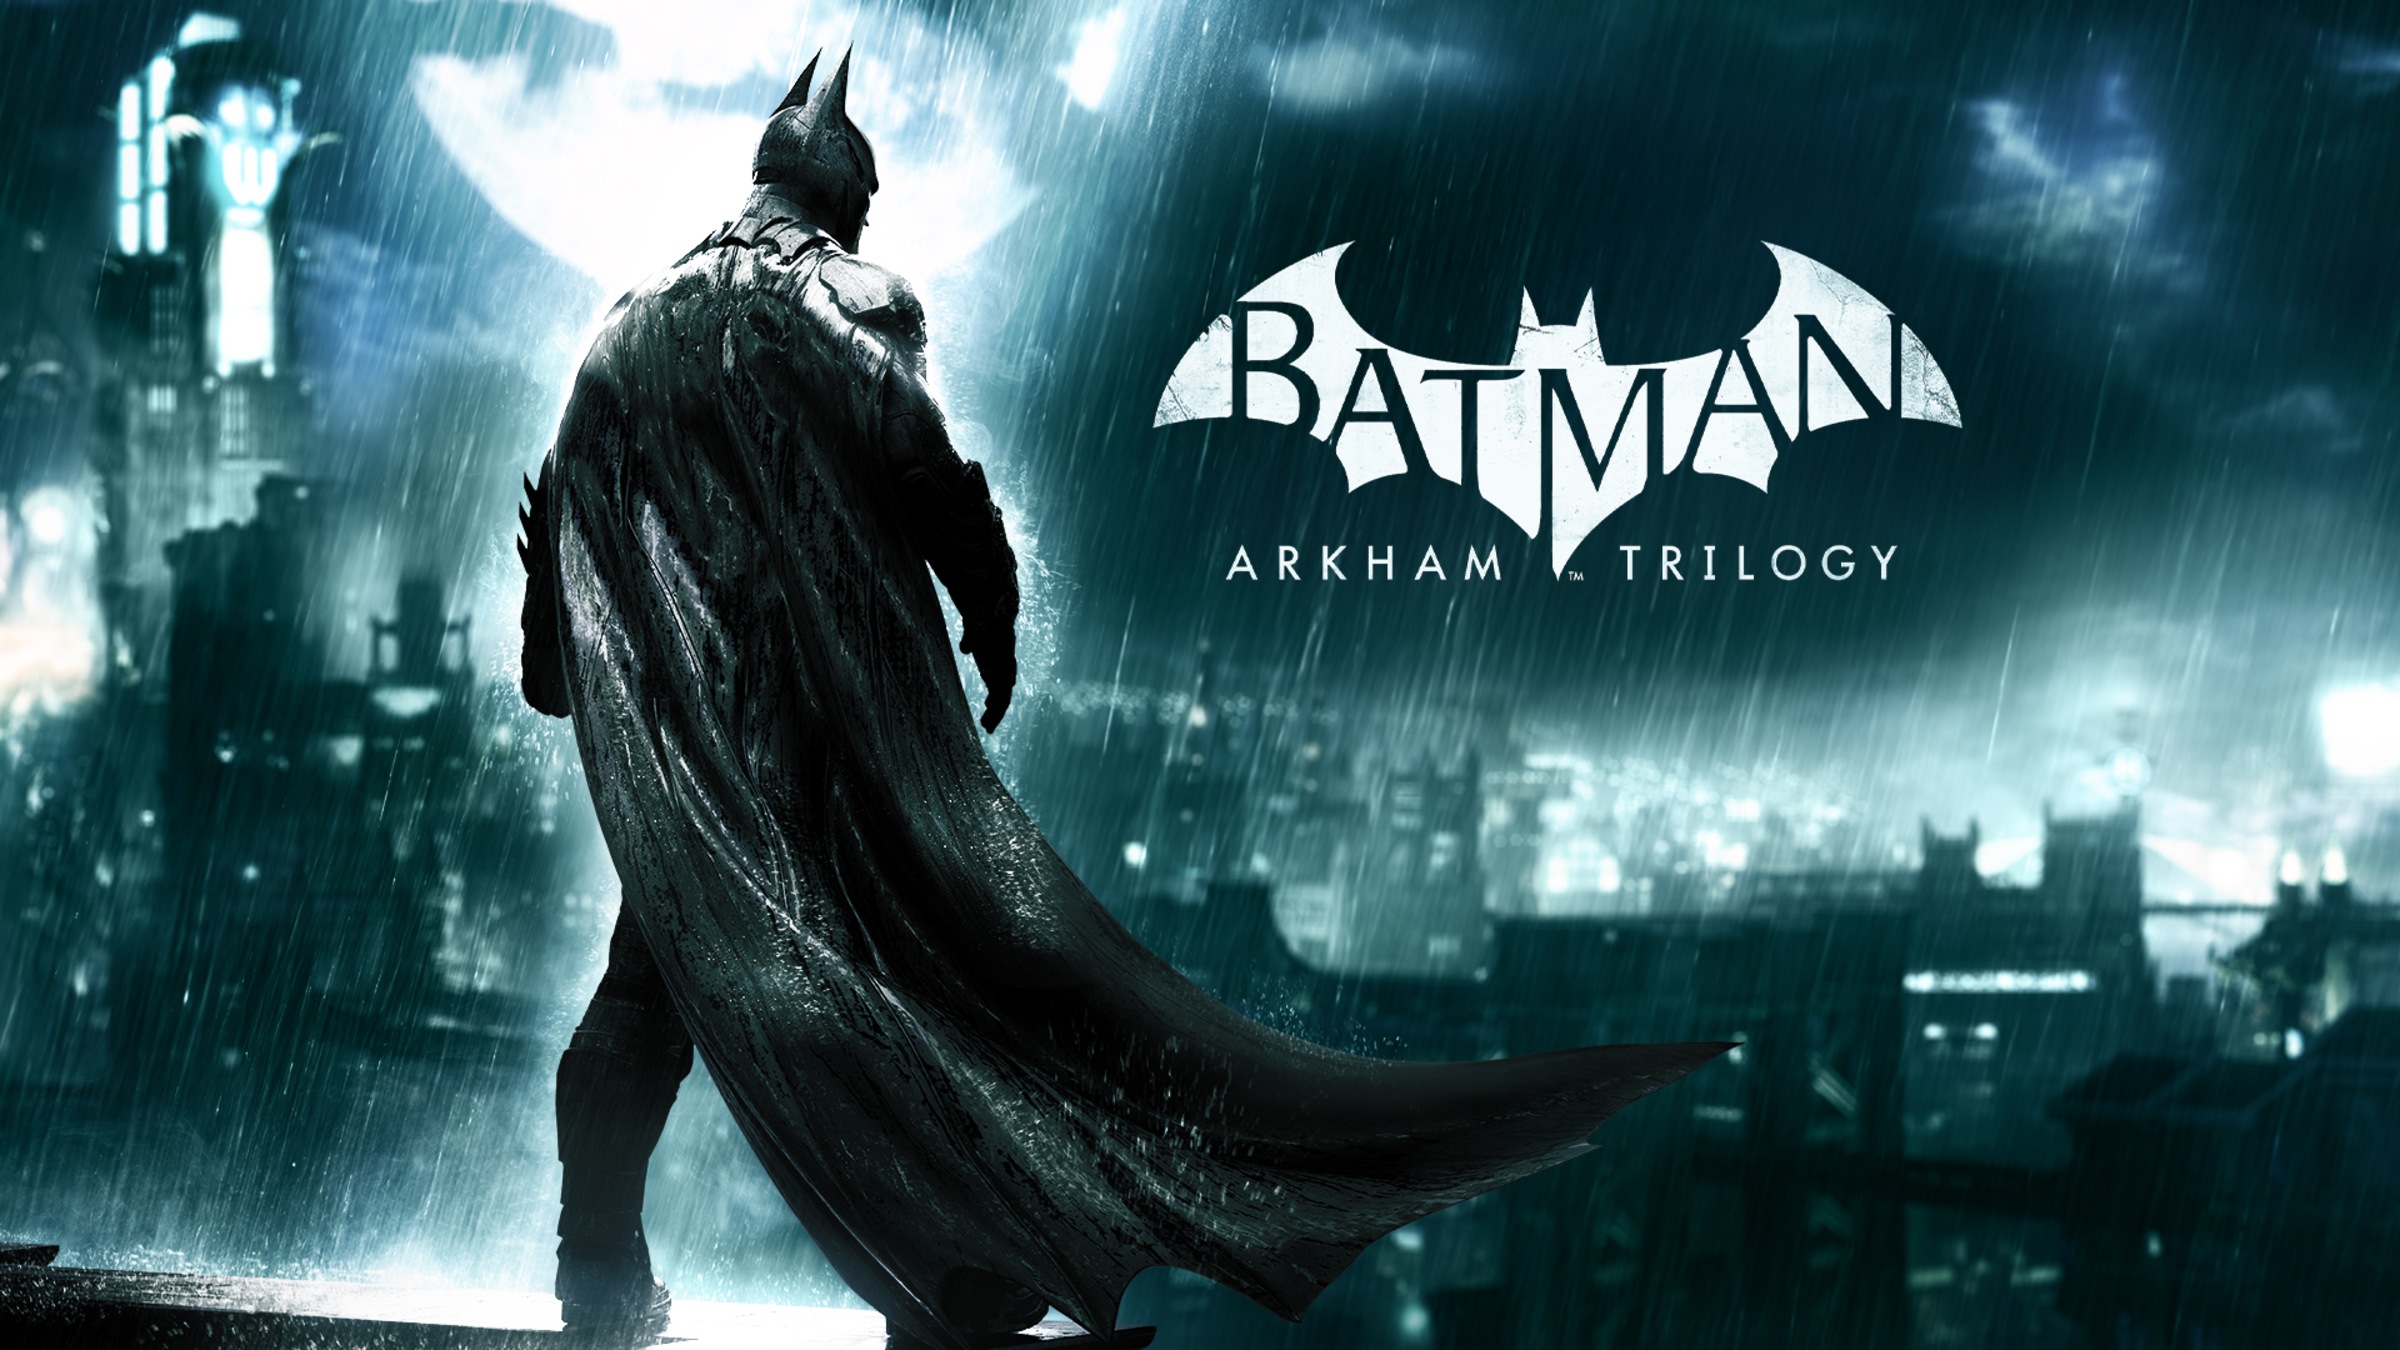 Comprar Batman: Arkham Origins Steam